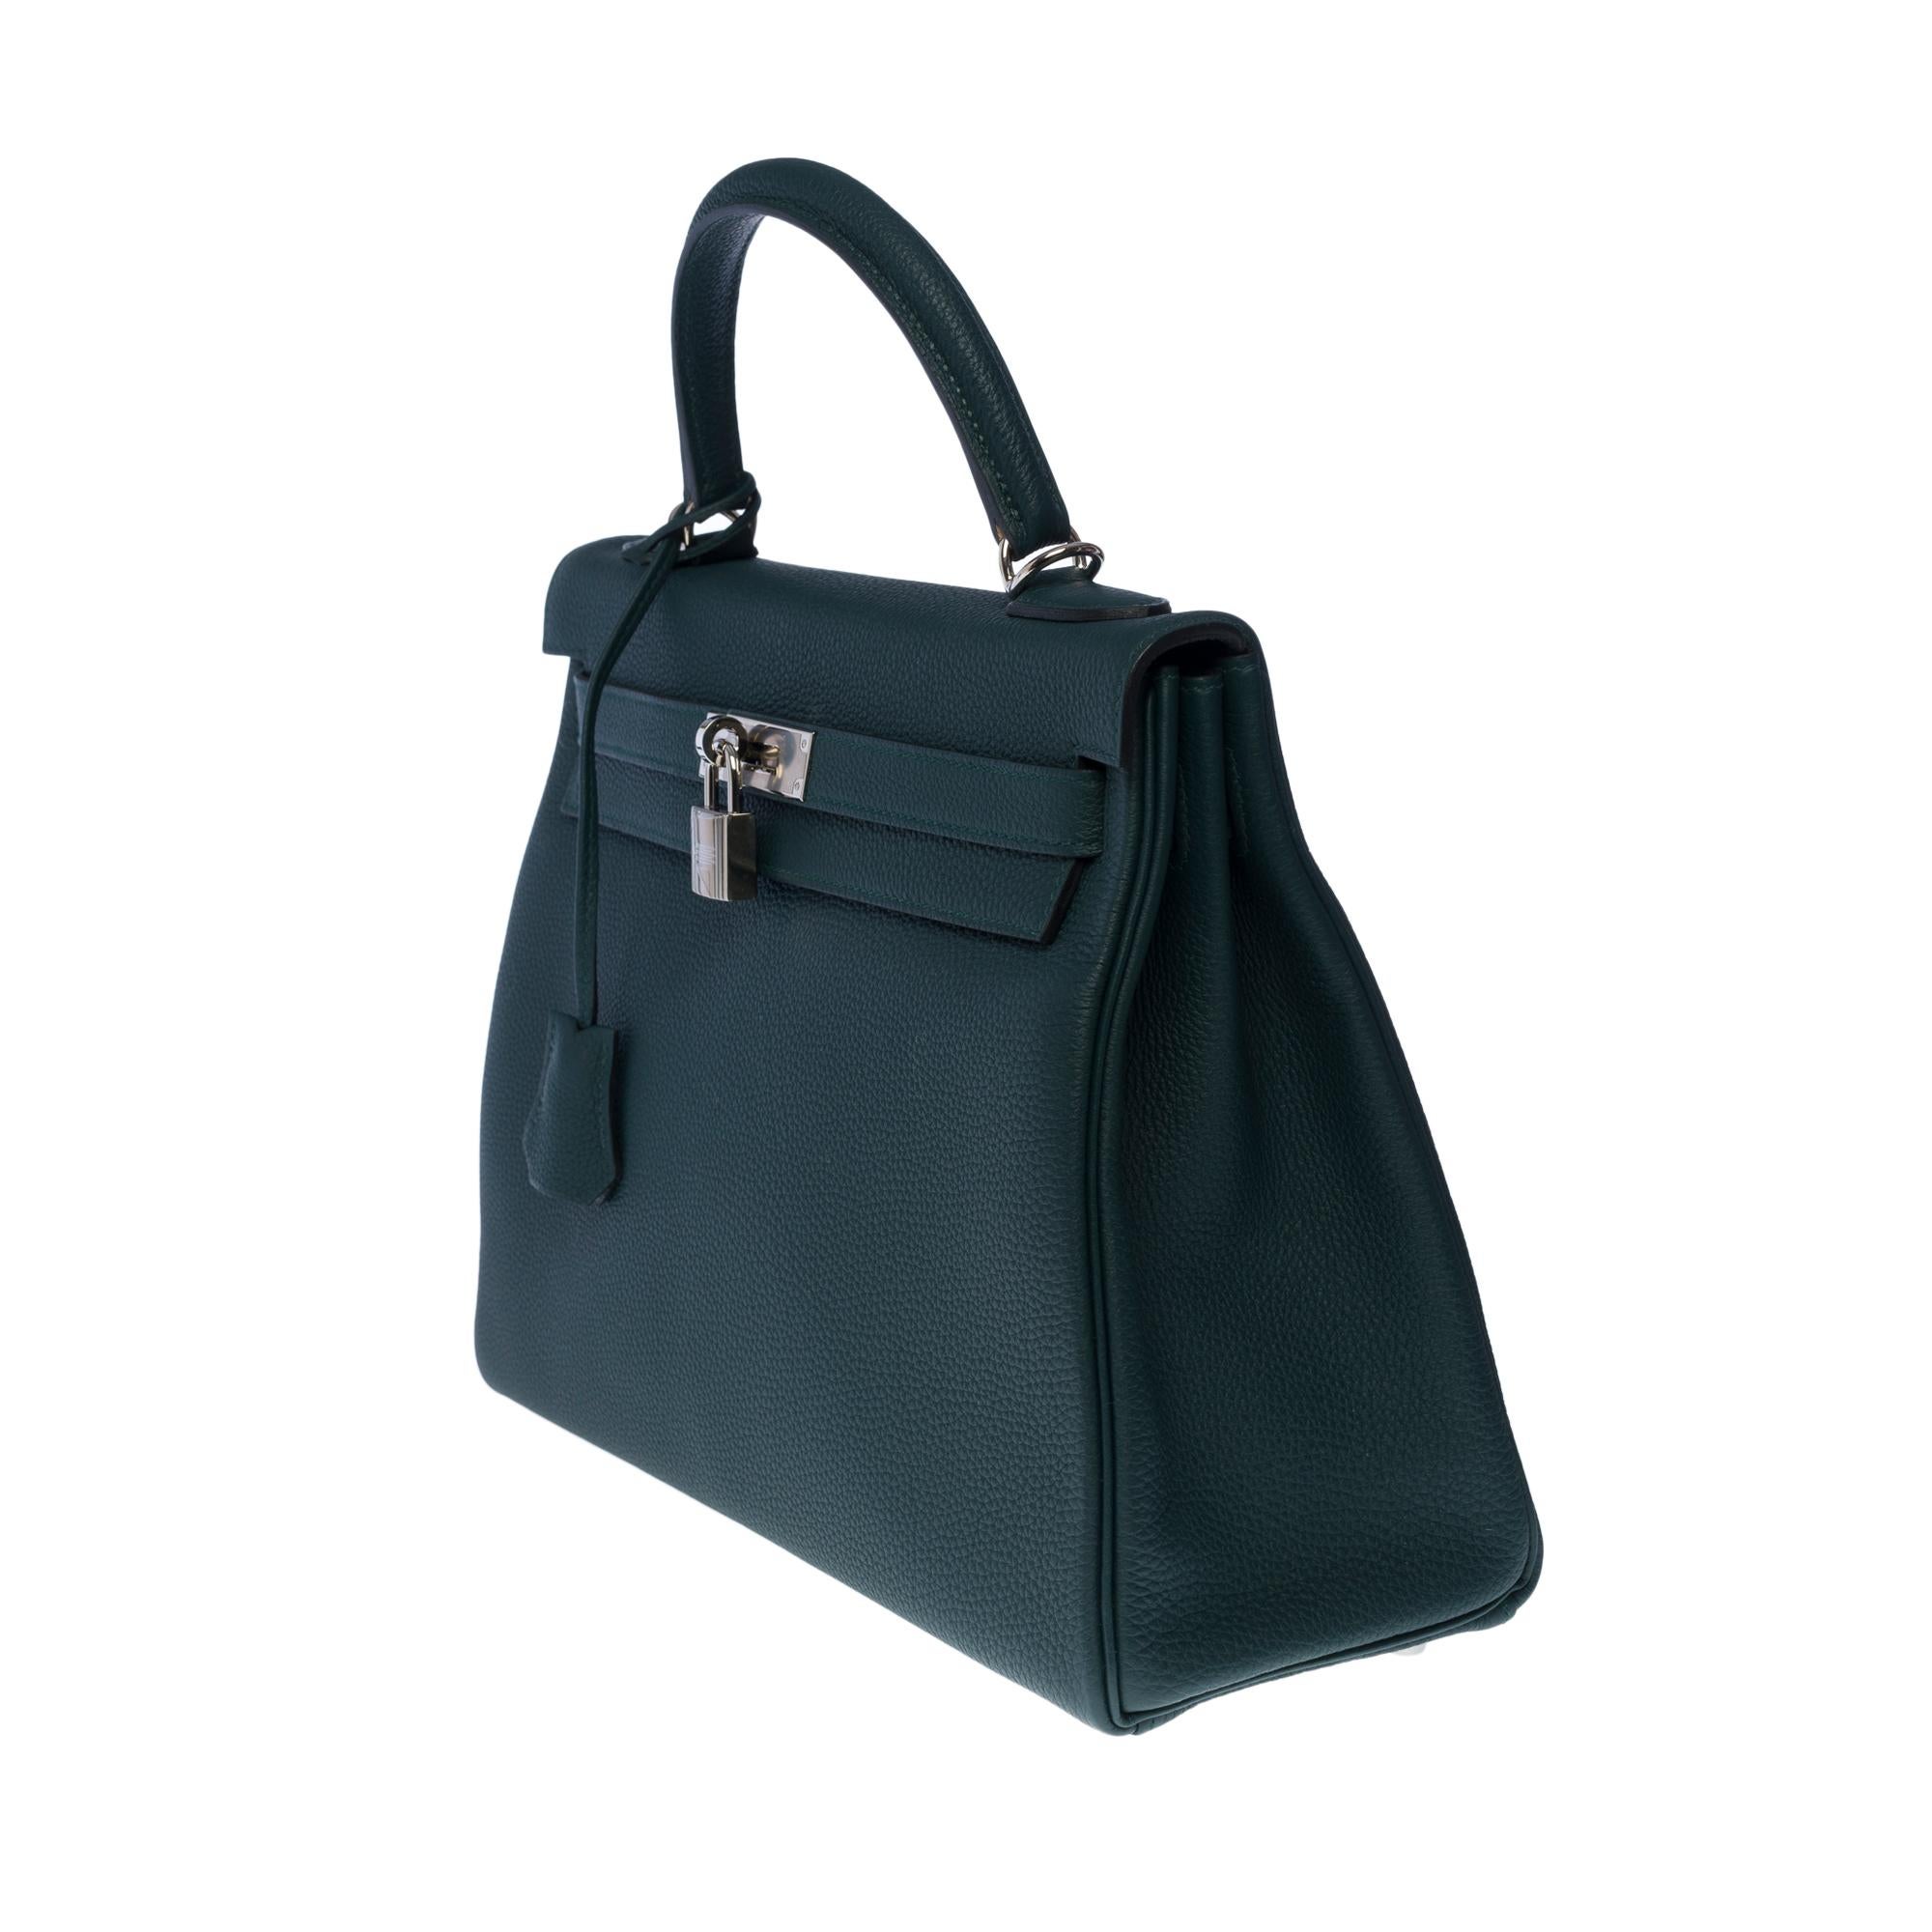 Women's or Men's New Hermès Kelly 32 retourne handbag strap in Green Cypres Togo leather, SHW